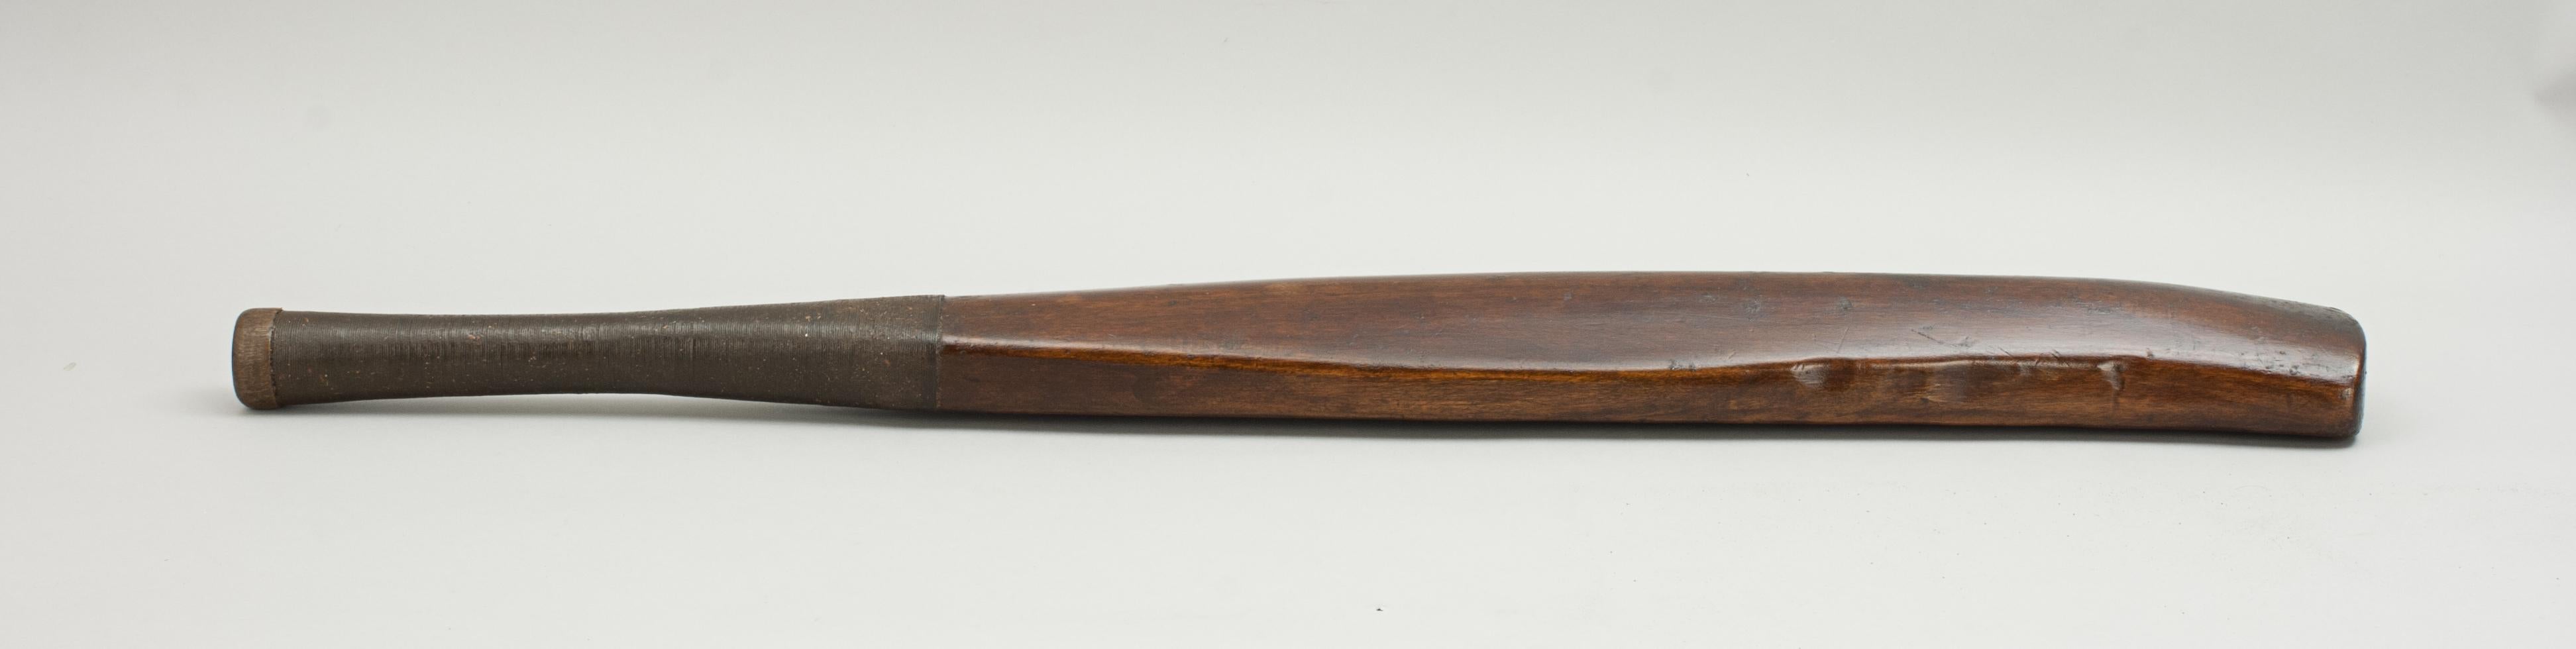 old cricket bat